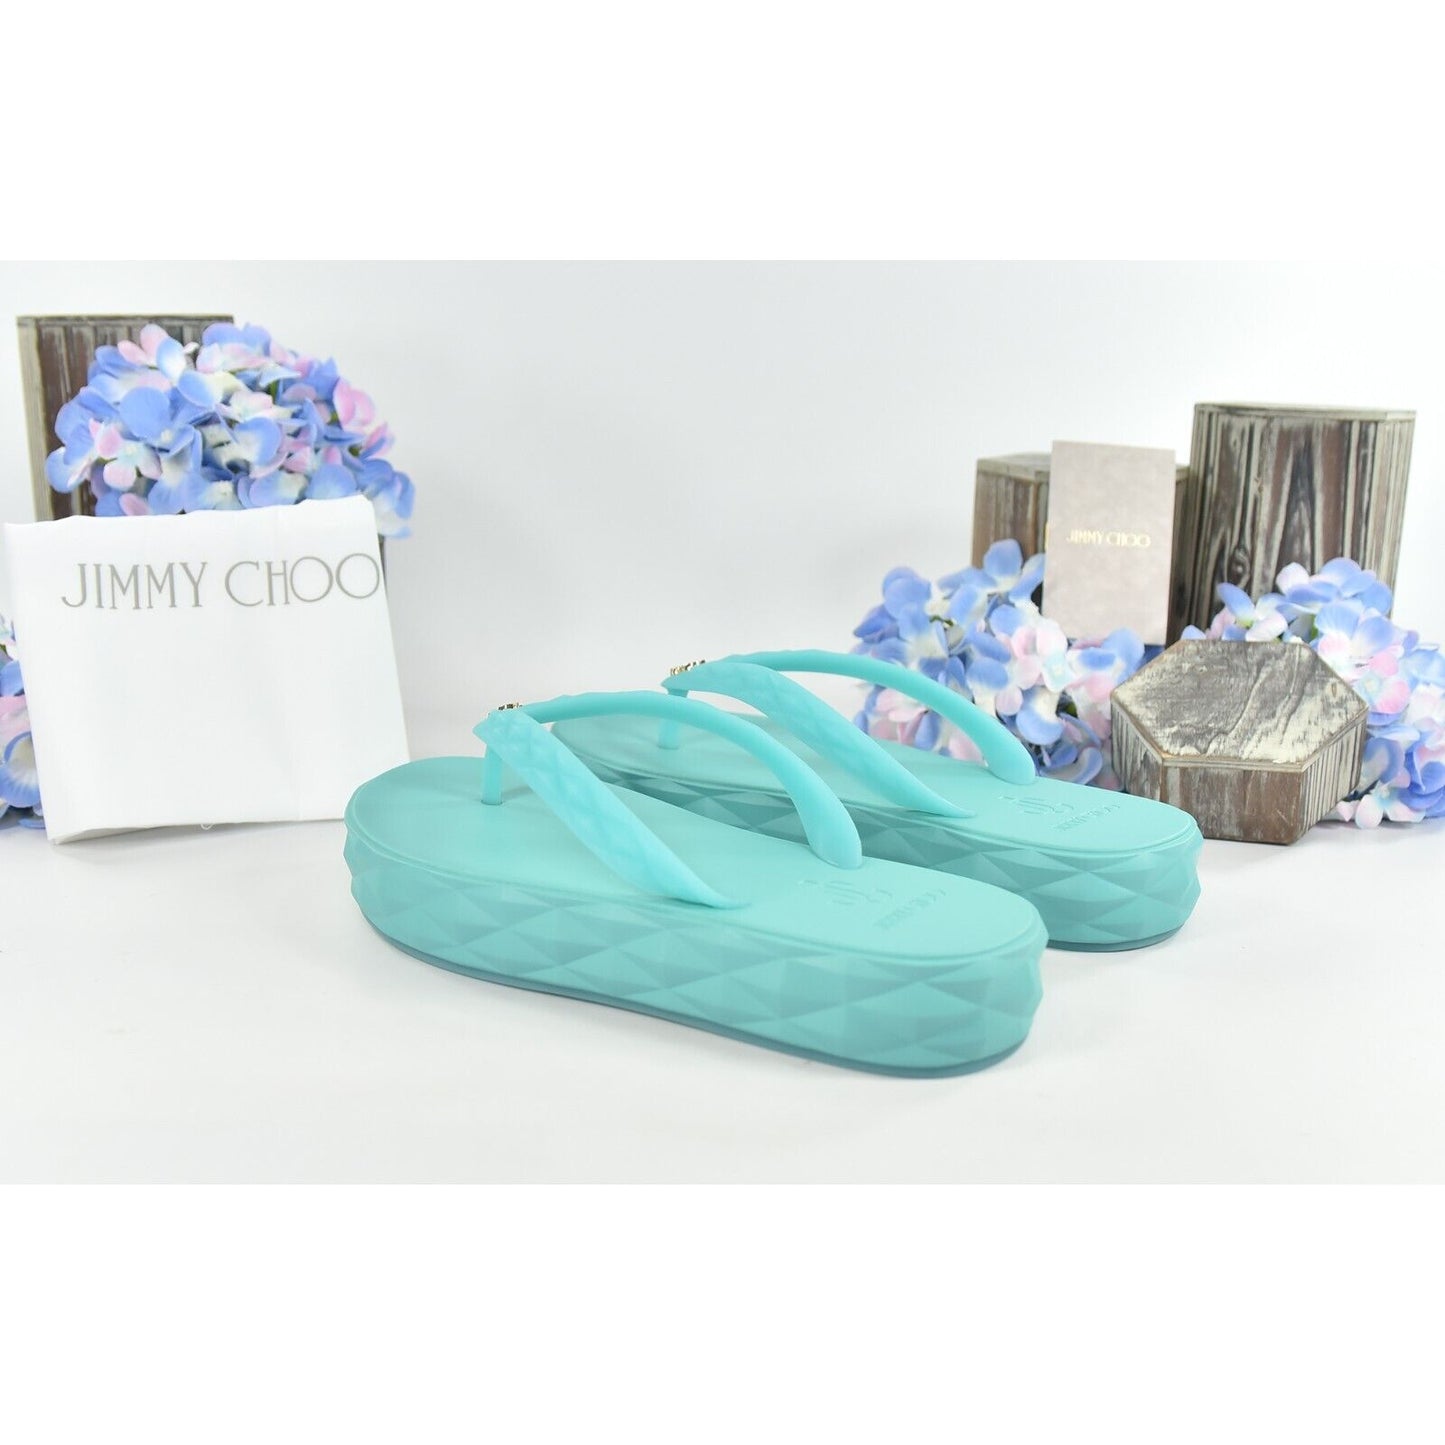 Jimmy Choo Malibu Rubber Diamond Flip Flop Slide Sandals Size 37 NIB